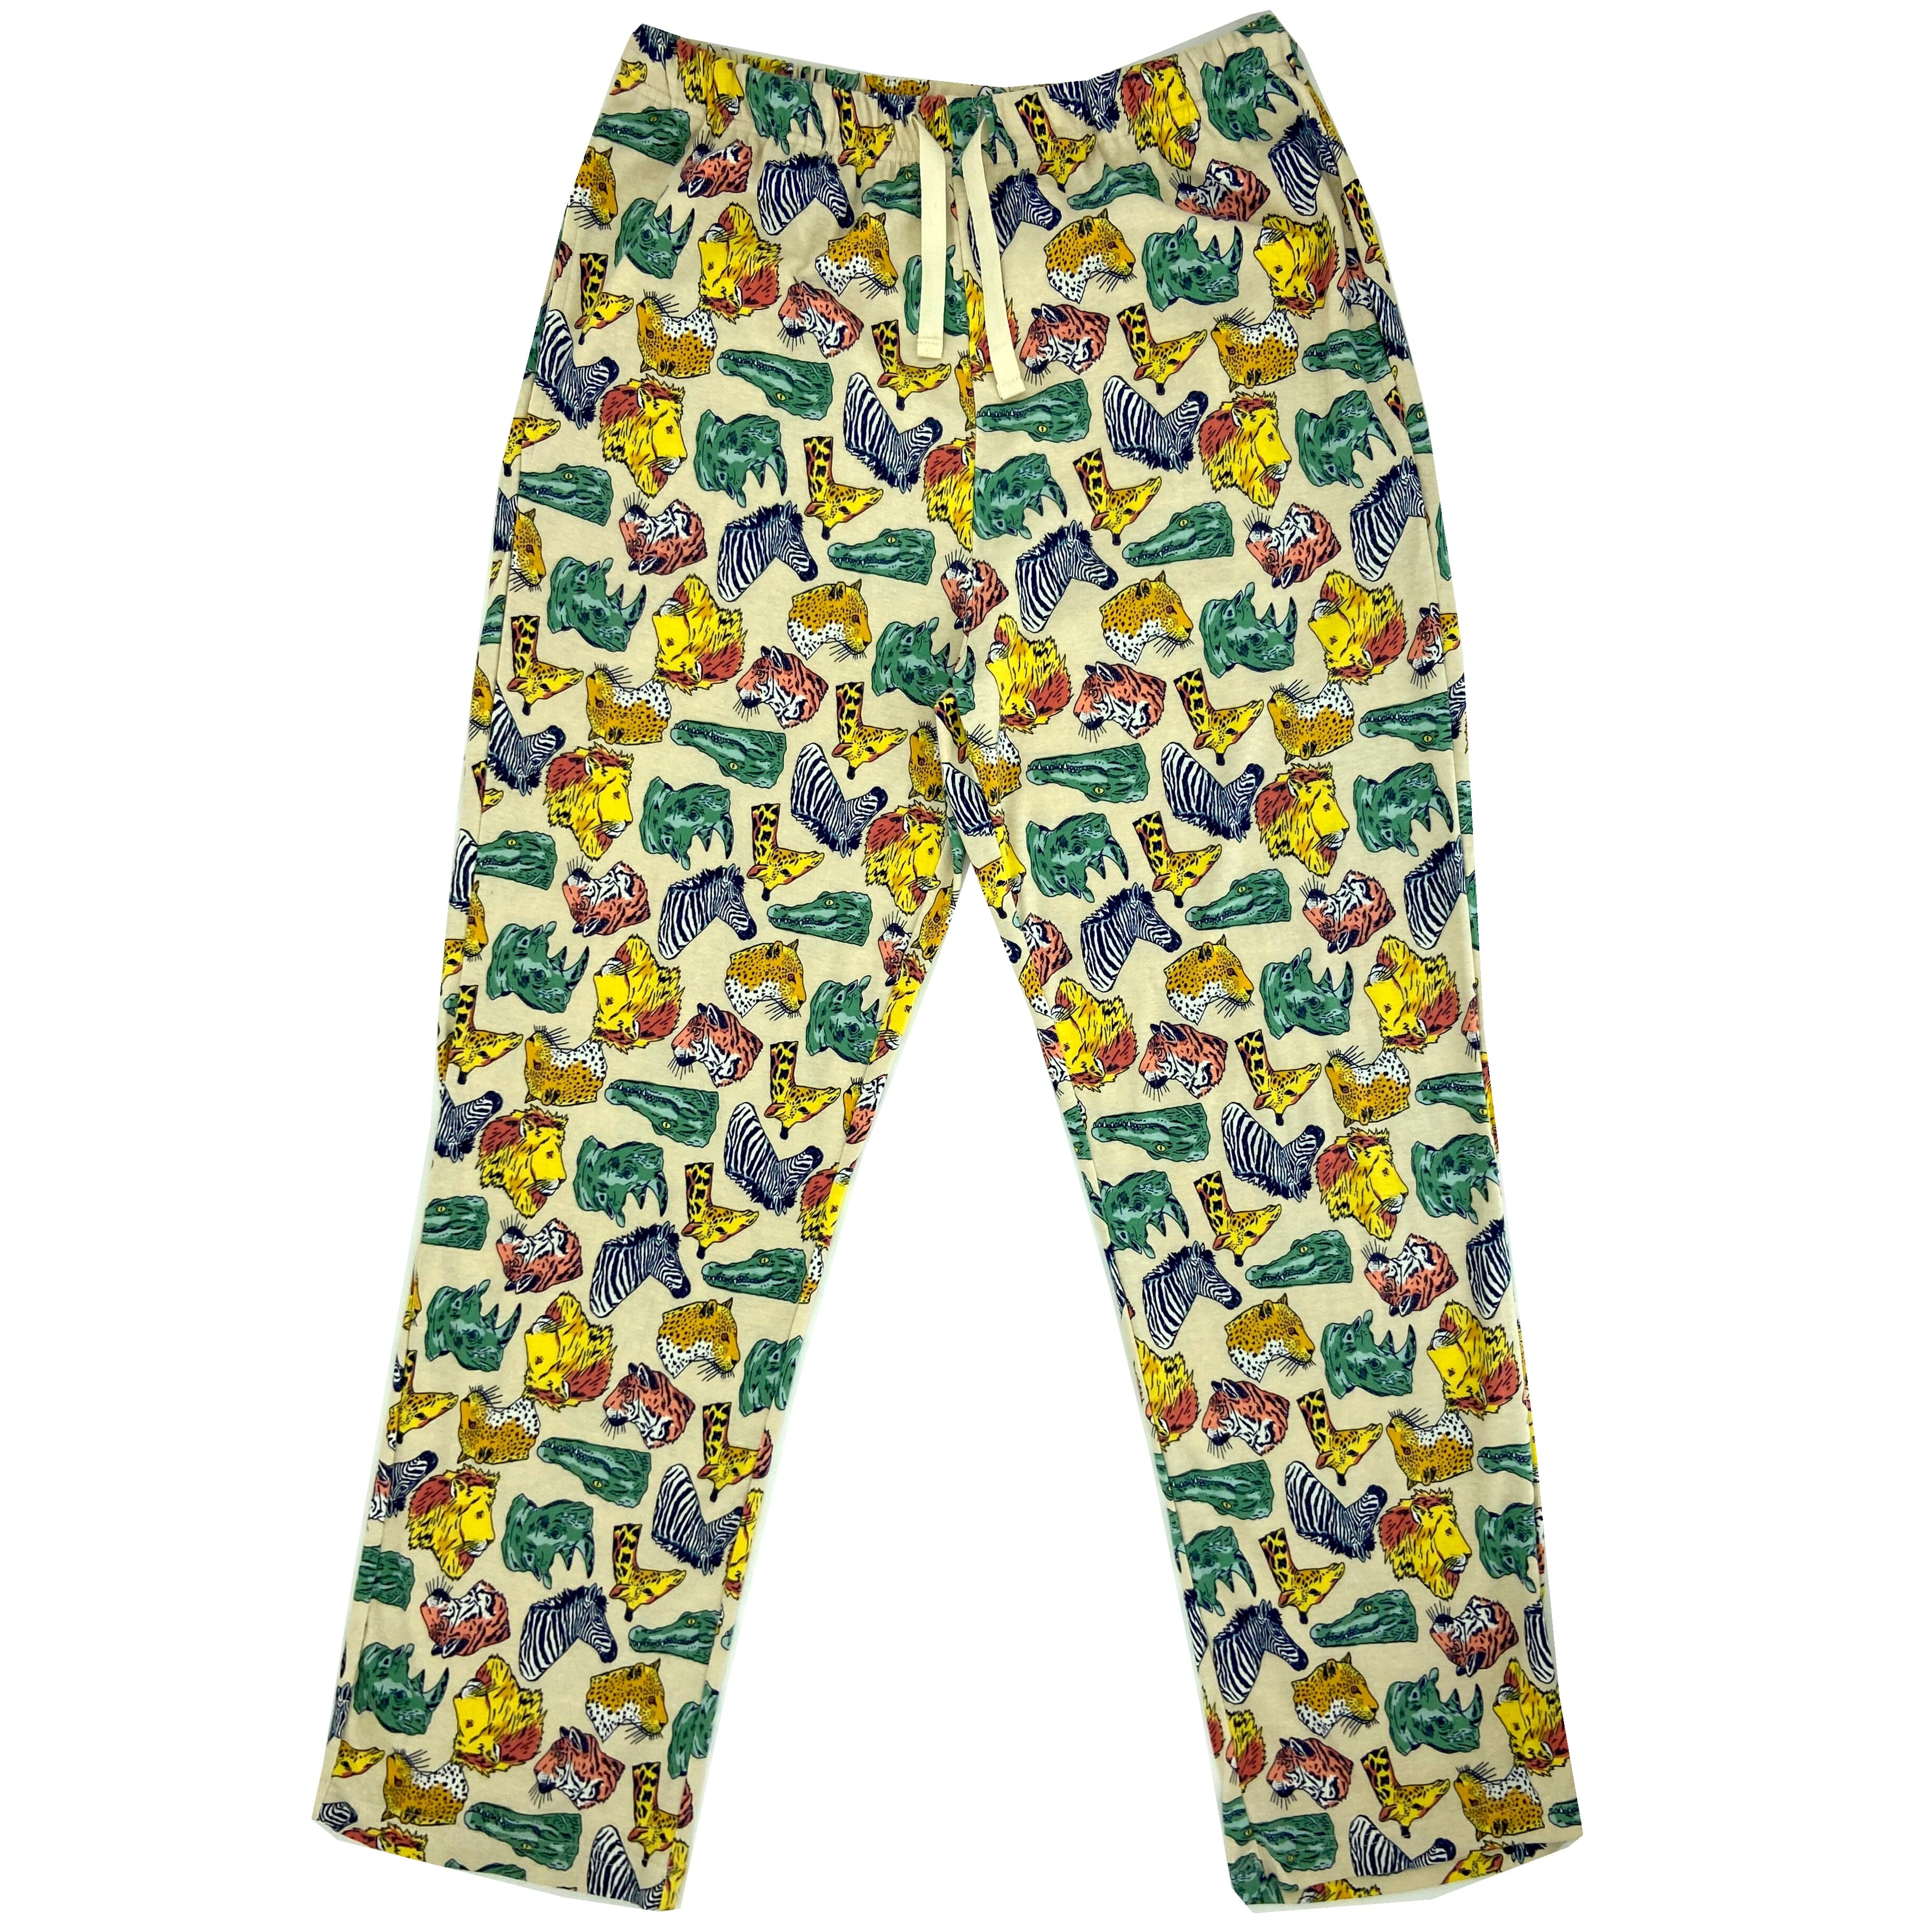 Men's Comfy Safari Animal Print Lion Zebra Rhino Pajama Pant Bottoms